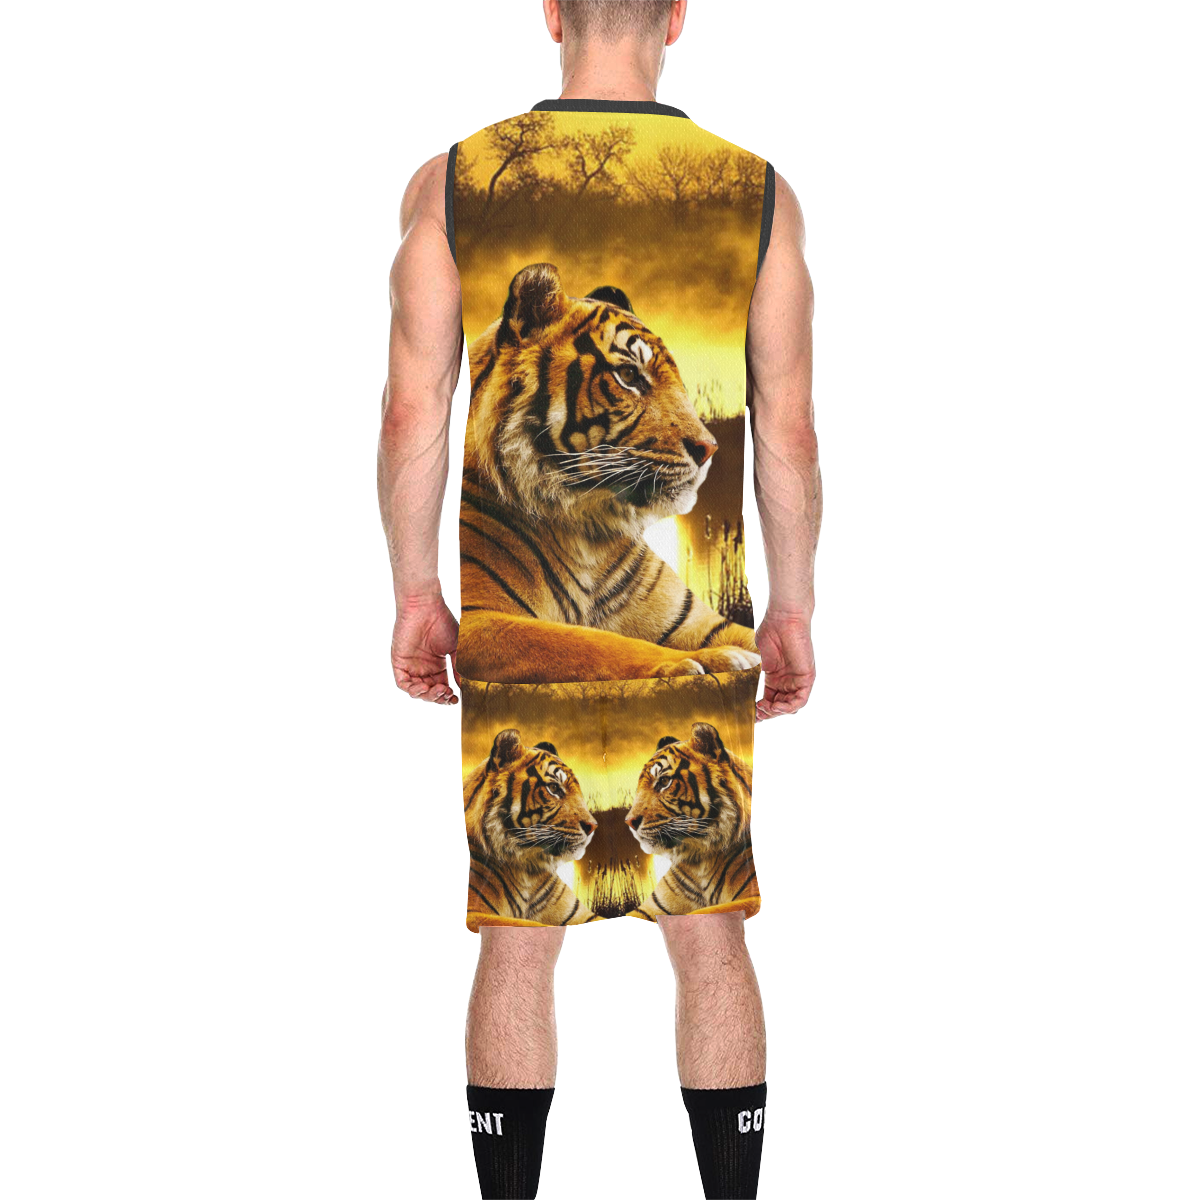 Tiger and Sunset All Over Print Basketball Uniform